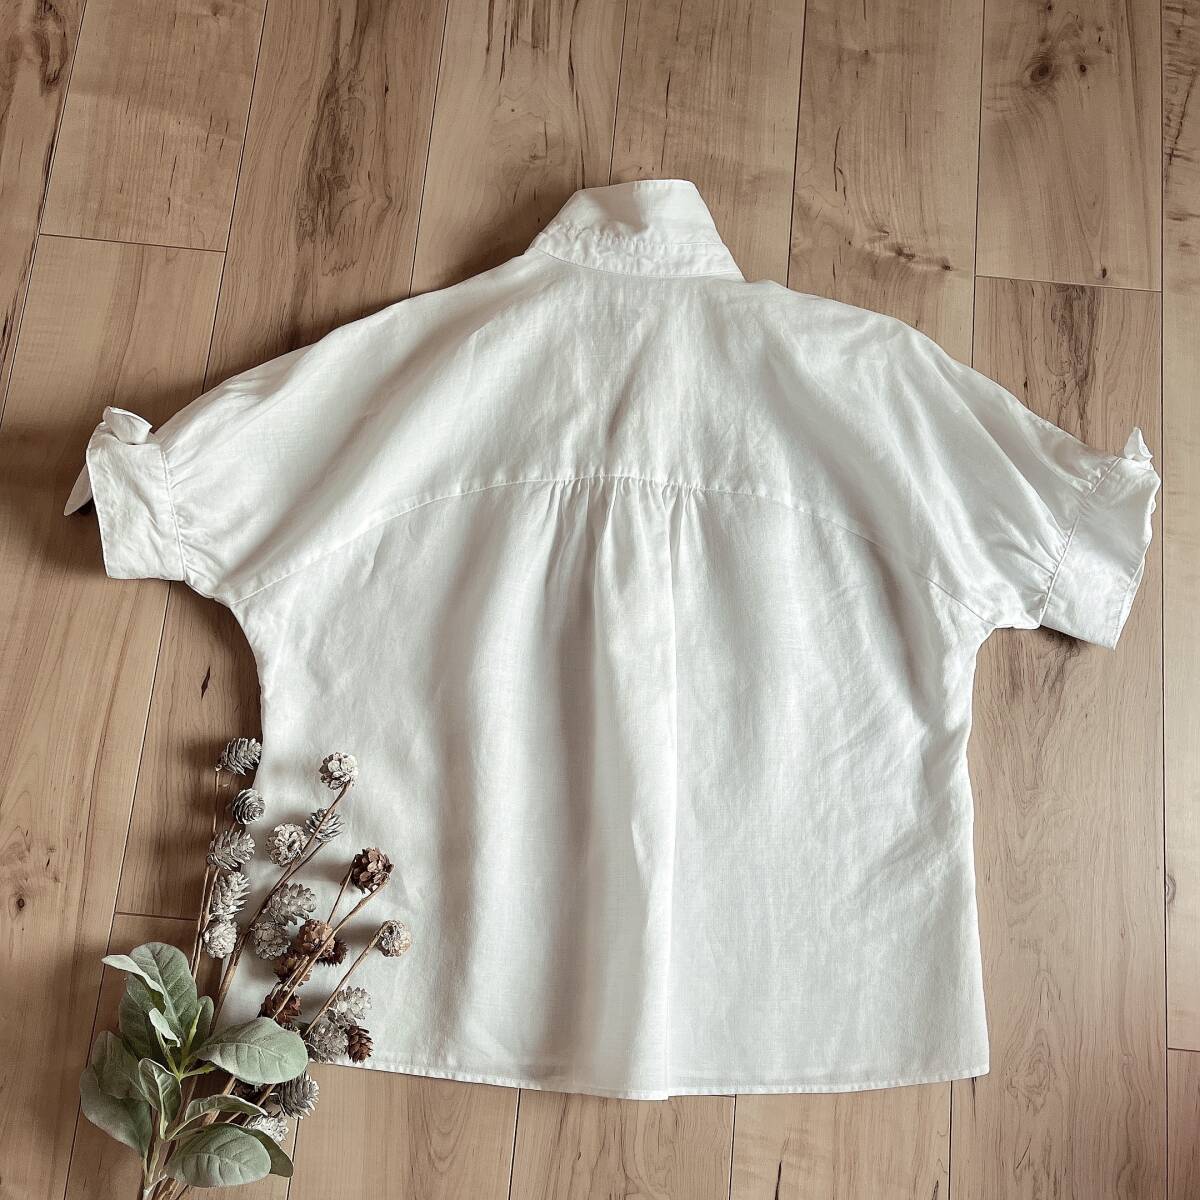 ② Iena treatment SIMPLICITEsimpli City e flax linenla gran Skipper shirt blouse oversize white large size free 